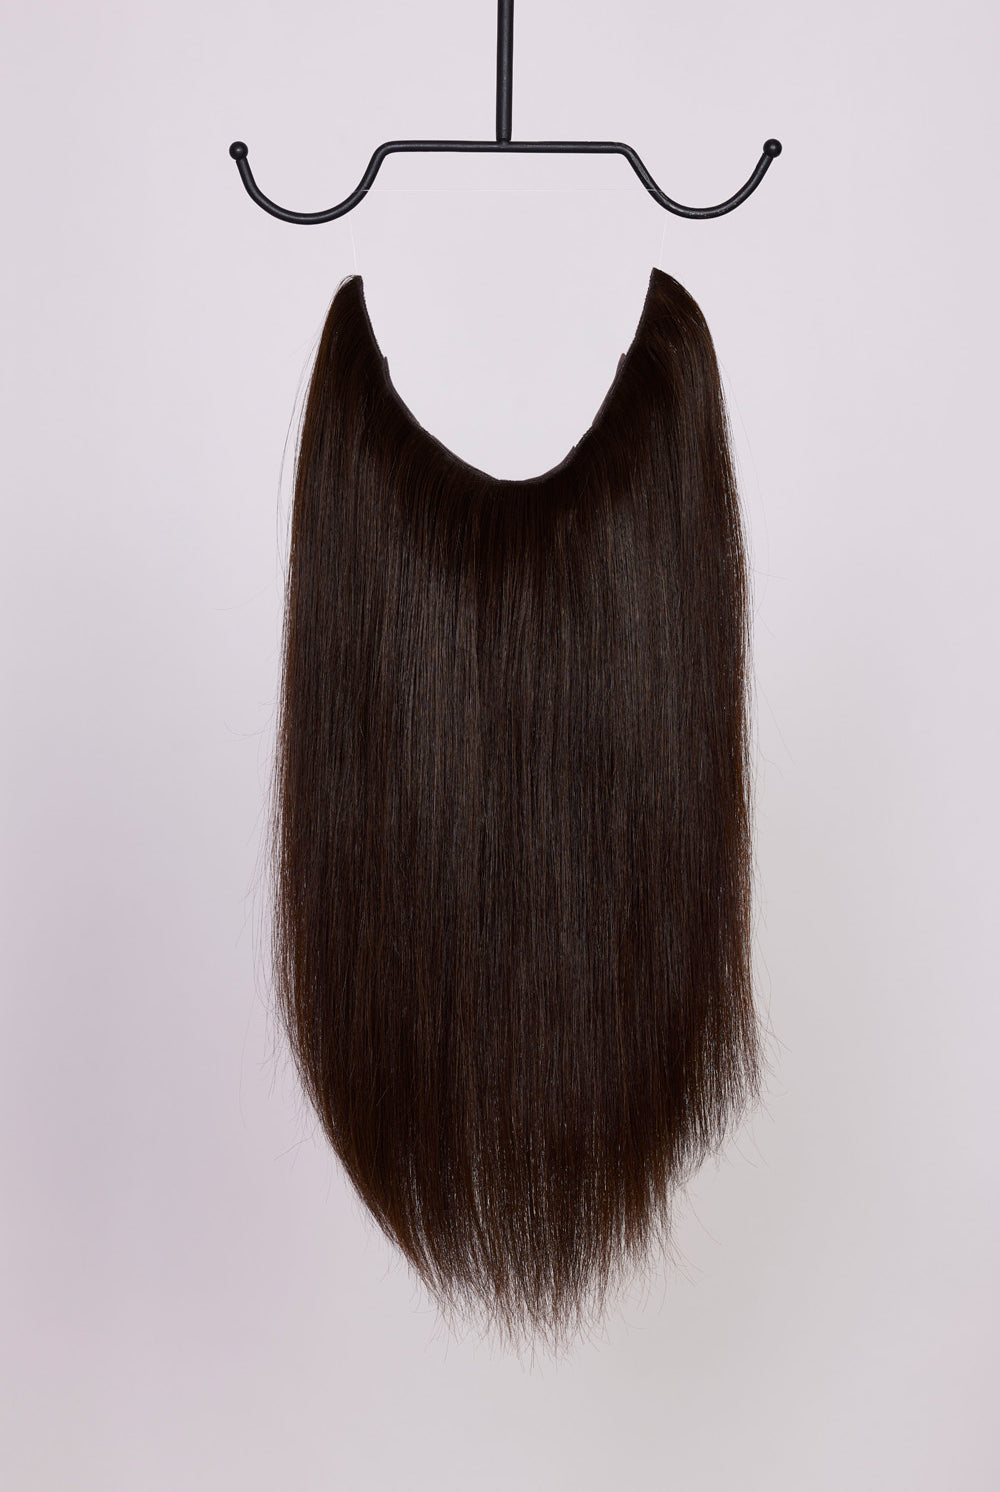 BHBD Hairband dark brown 40 cm.100% Remy hair. Clip-in, halo, or ponytail.